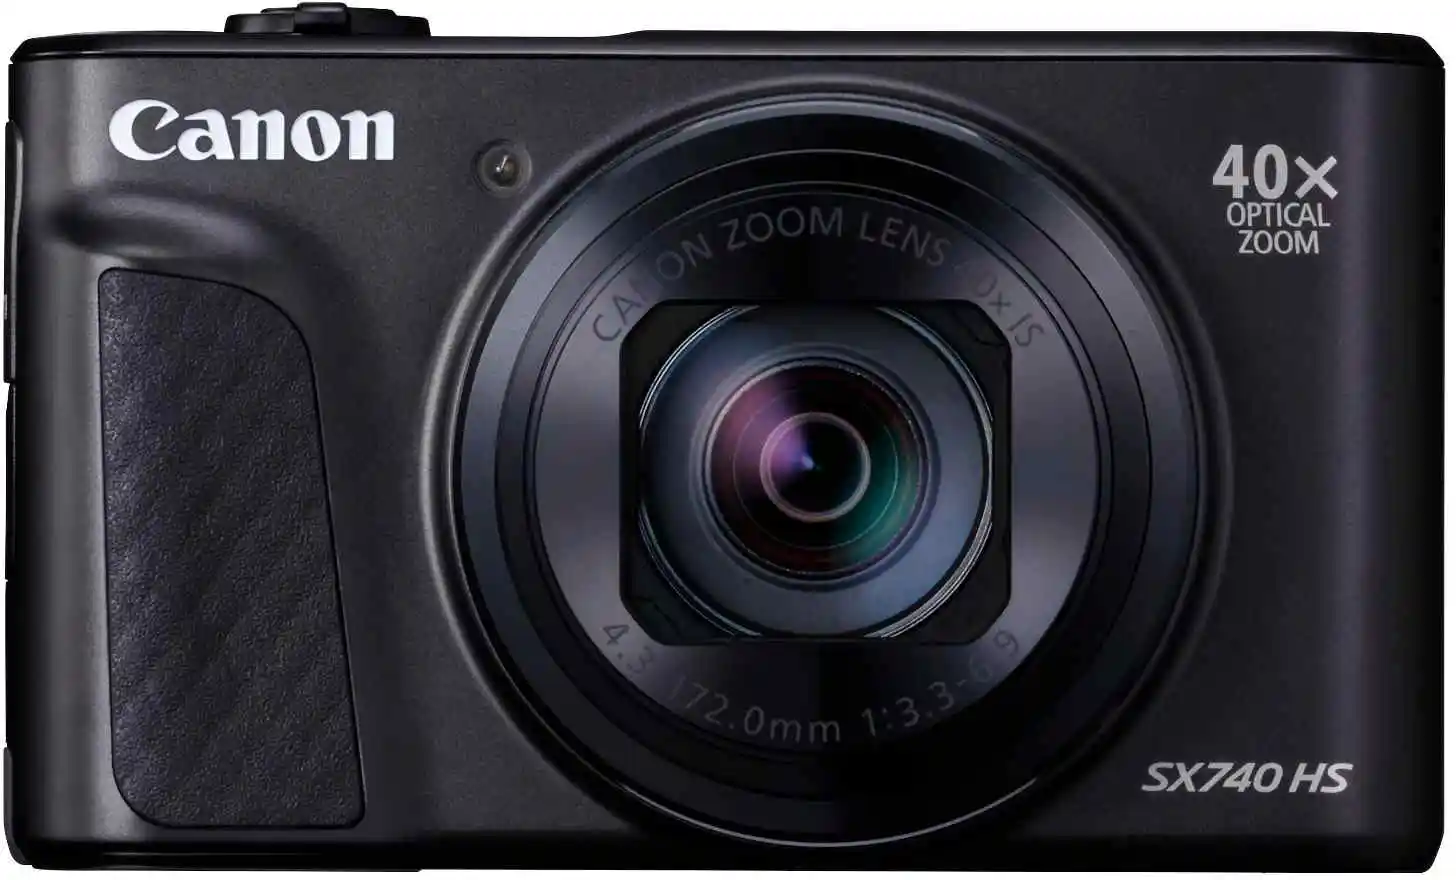 Image of Canon Powershot SX740HS Black Digital Compact Camera